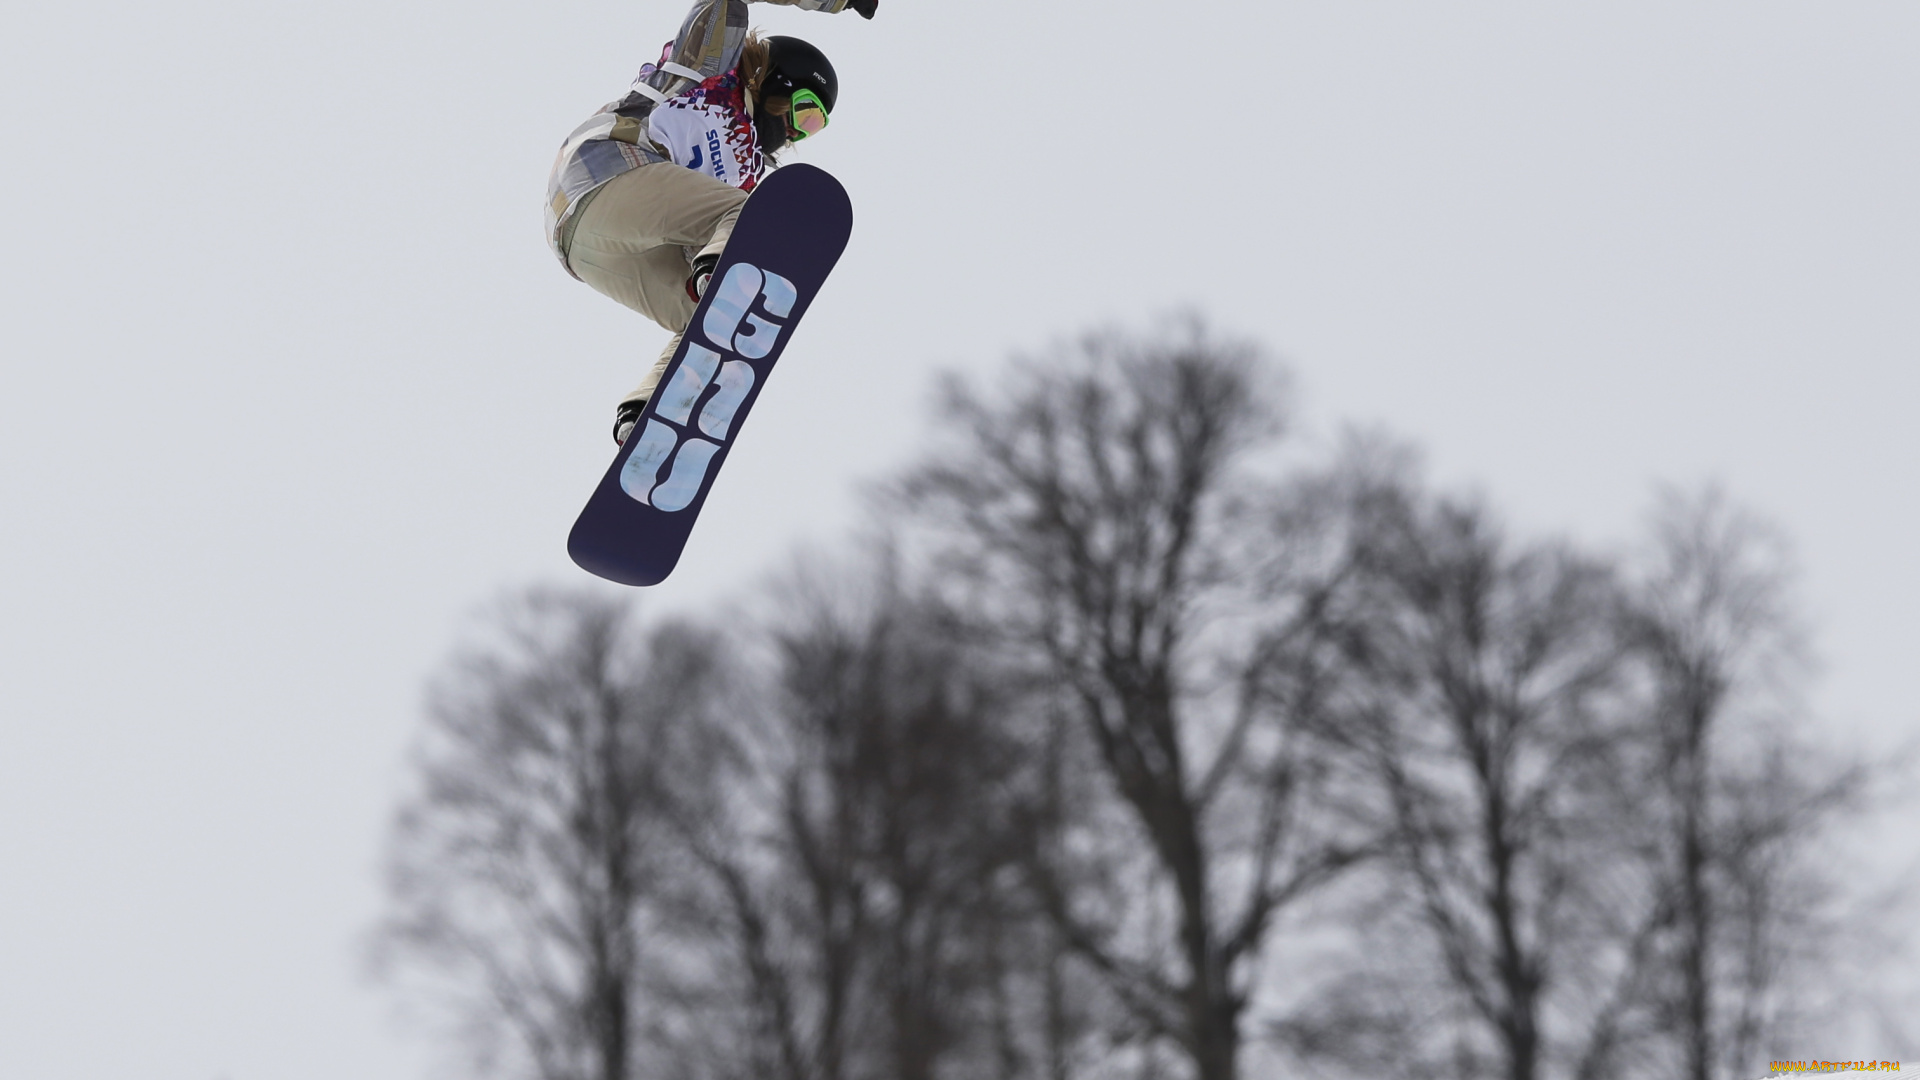 спорт, сноуборд, anne, rukaj, деревья, полет, олимпиада, снег, прыжок, спортсмен, сноубордист, финляндия, сочи